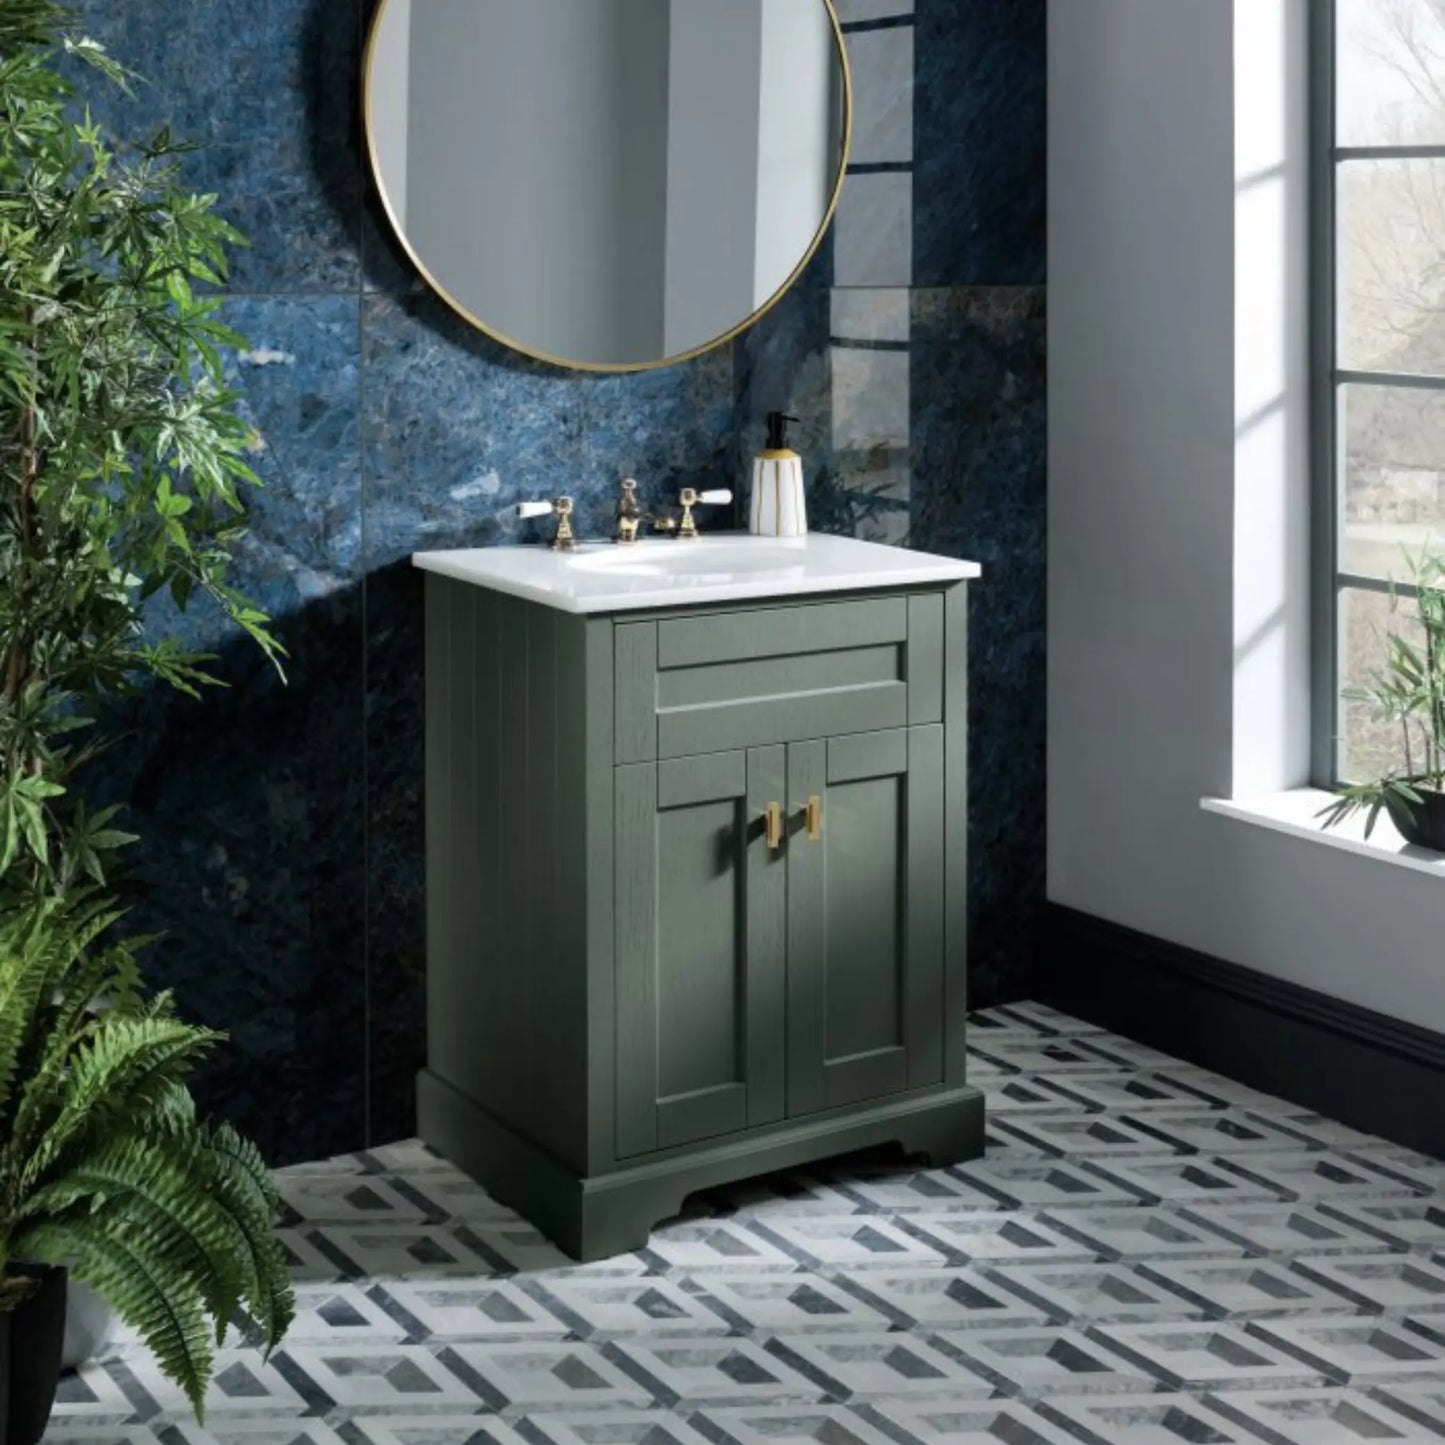 BC Designs, Victrion 2 Door Bathroom Vanity Unit & Marble Basin, Forest Green, 620mm BC Designs vanity unit